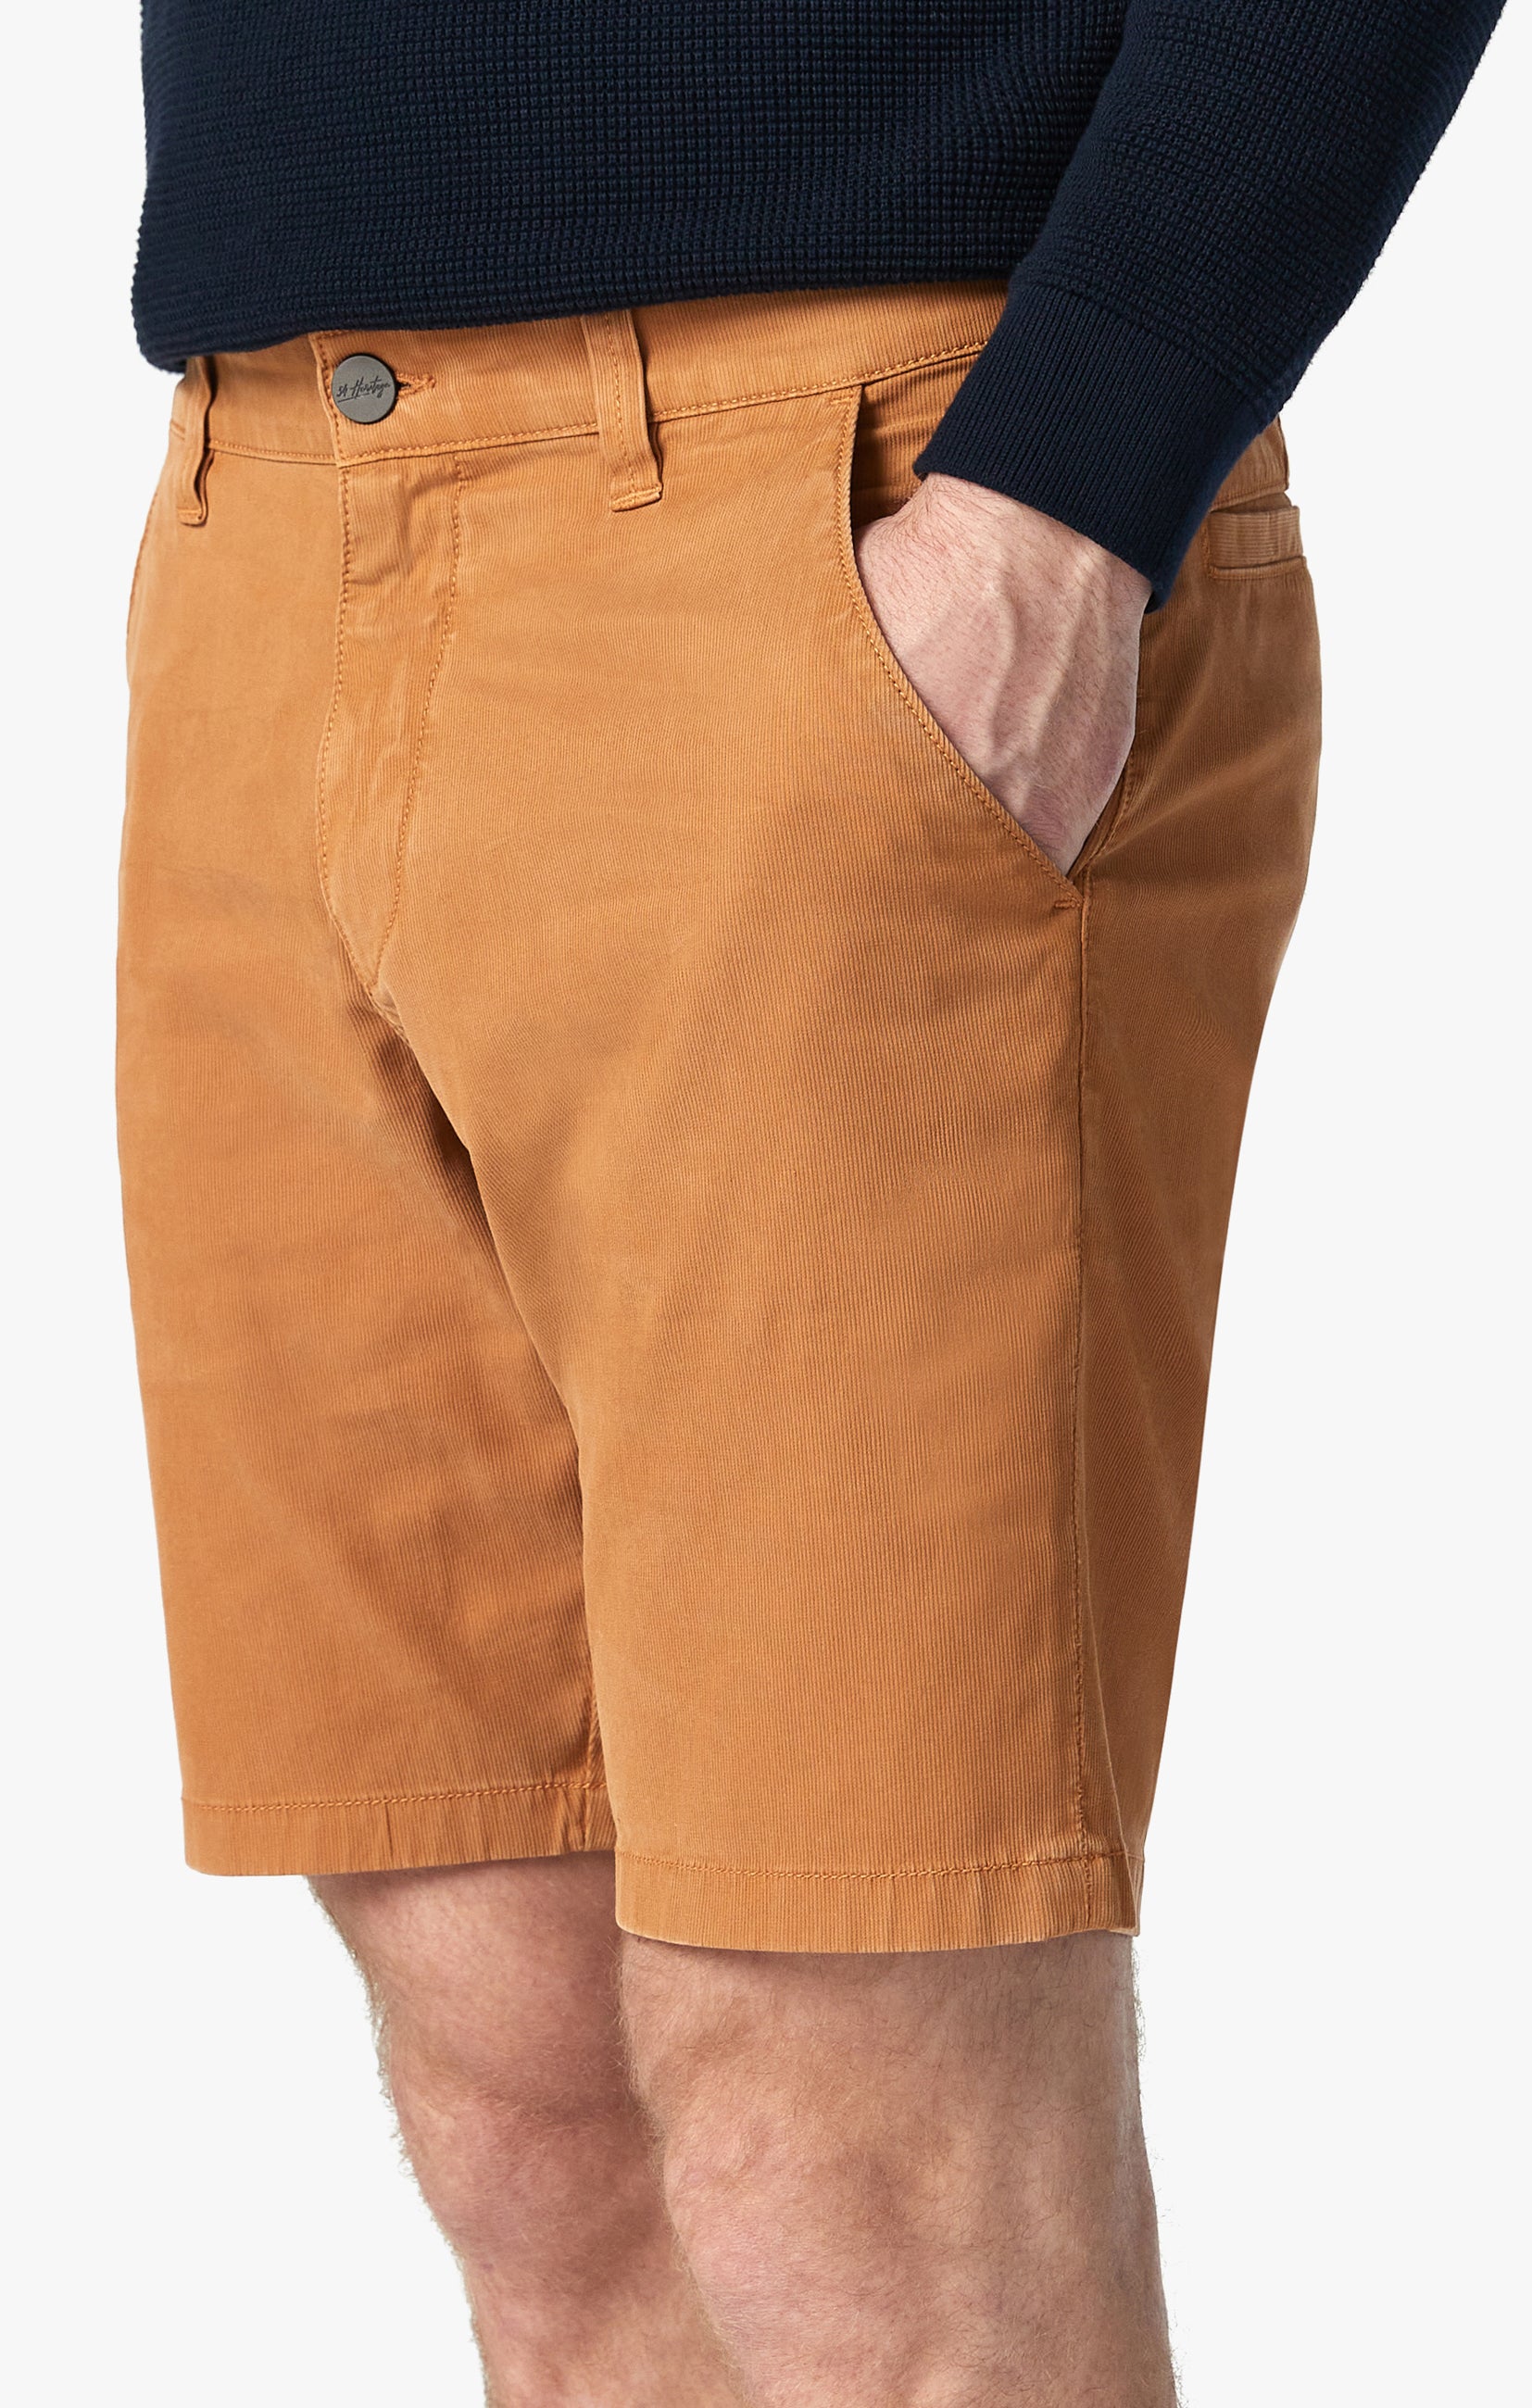 Arizona Slim Shorts in Brown Sugar Fine Touch Image 4